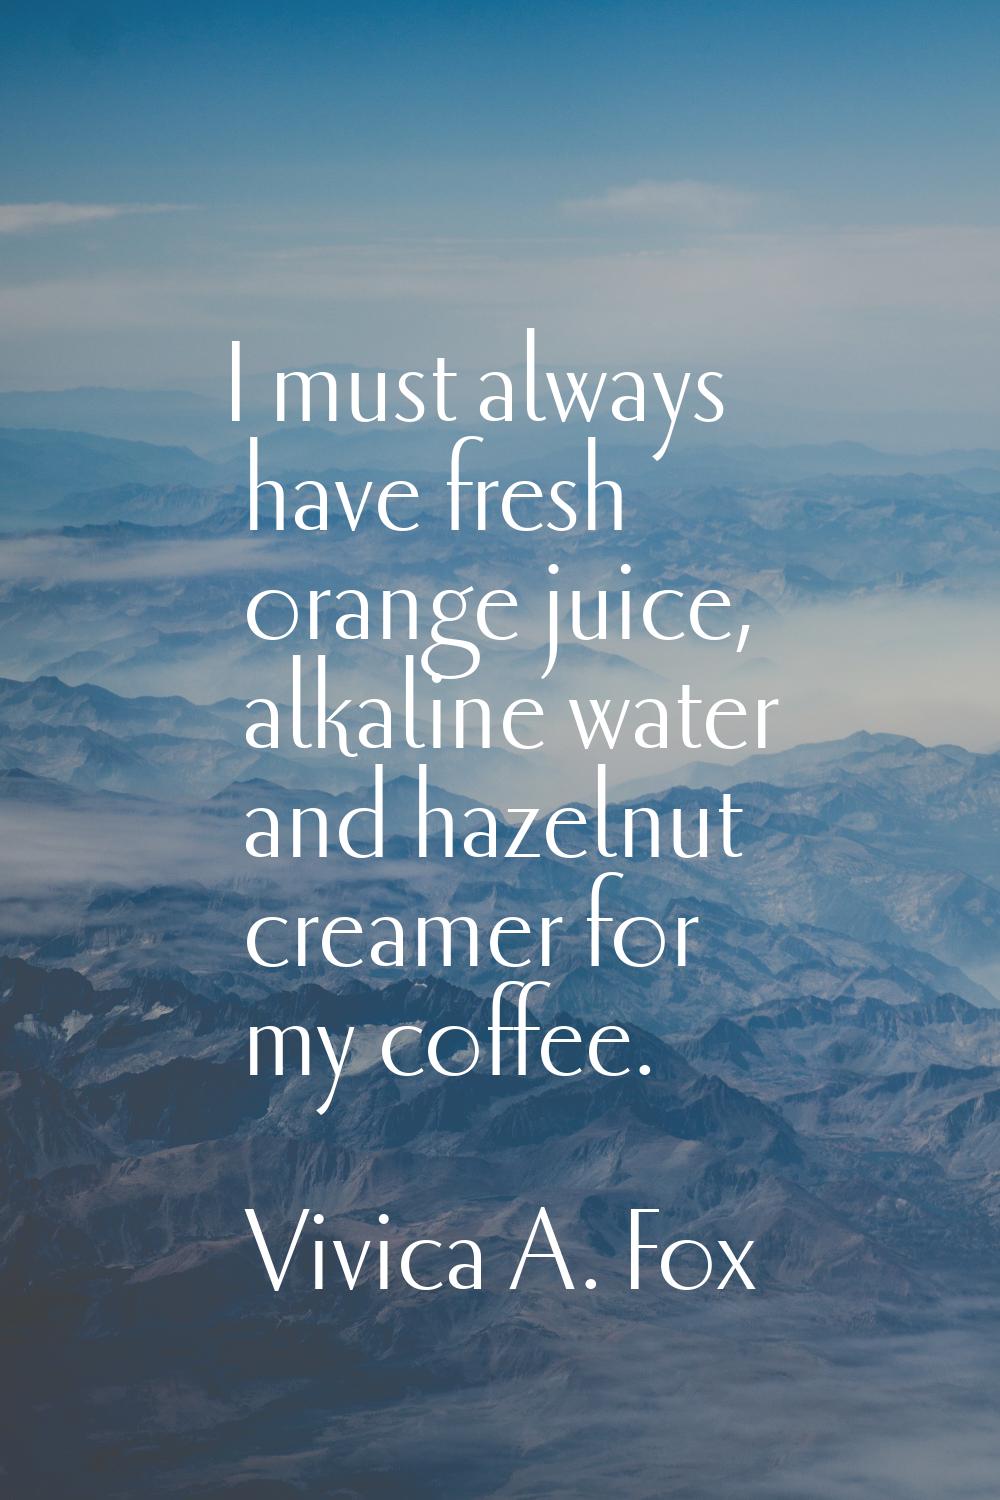 I must always have fresh orange juice, alkaline water and hazelnut creamer for my coffee.